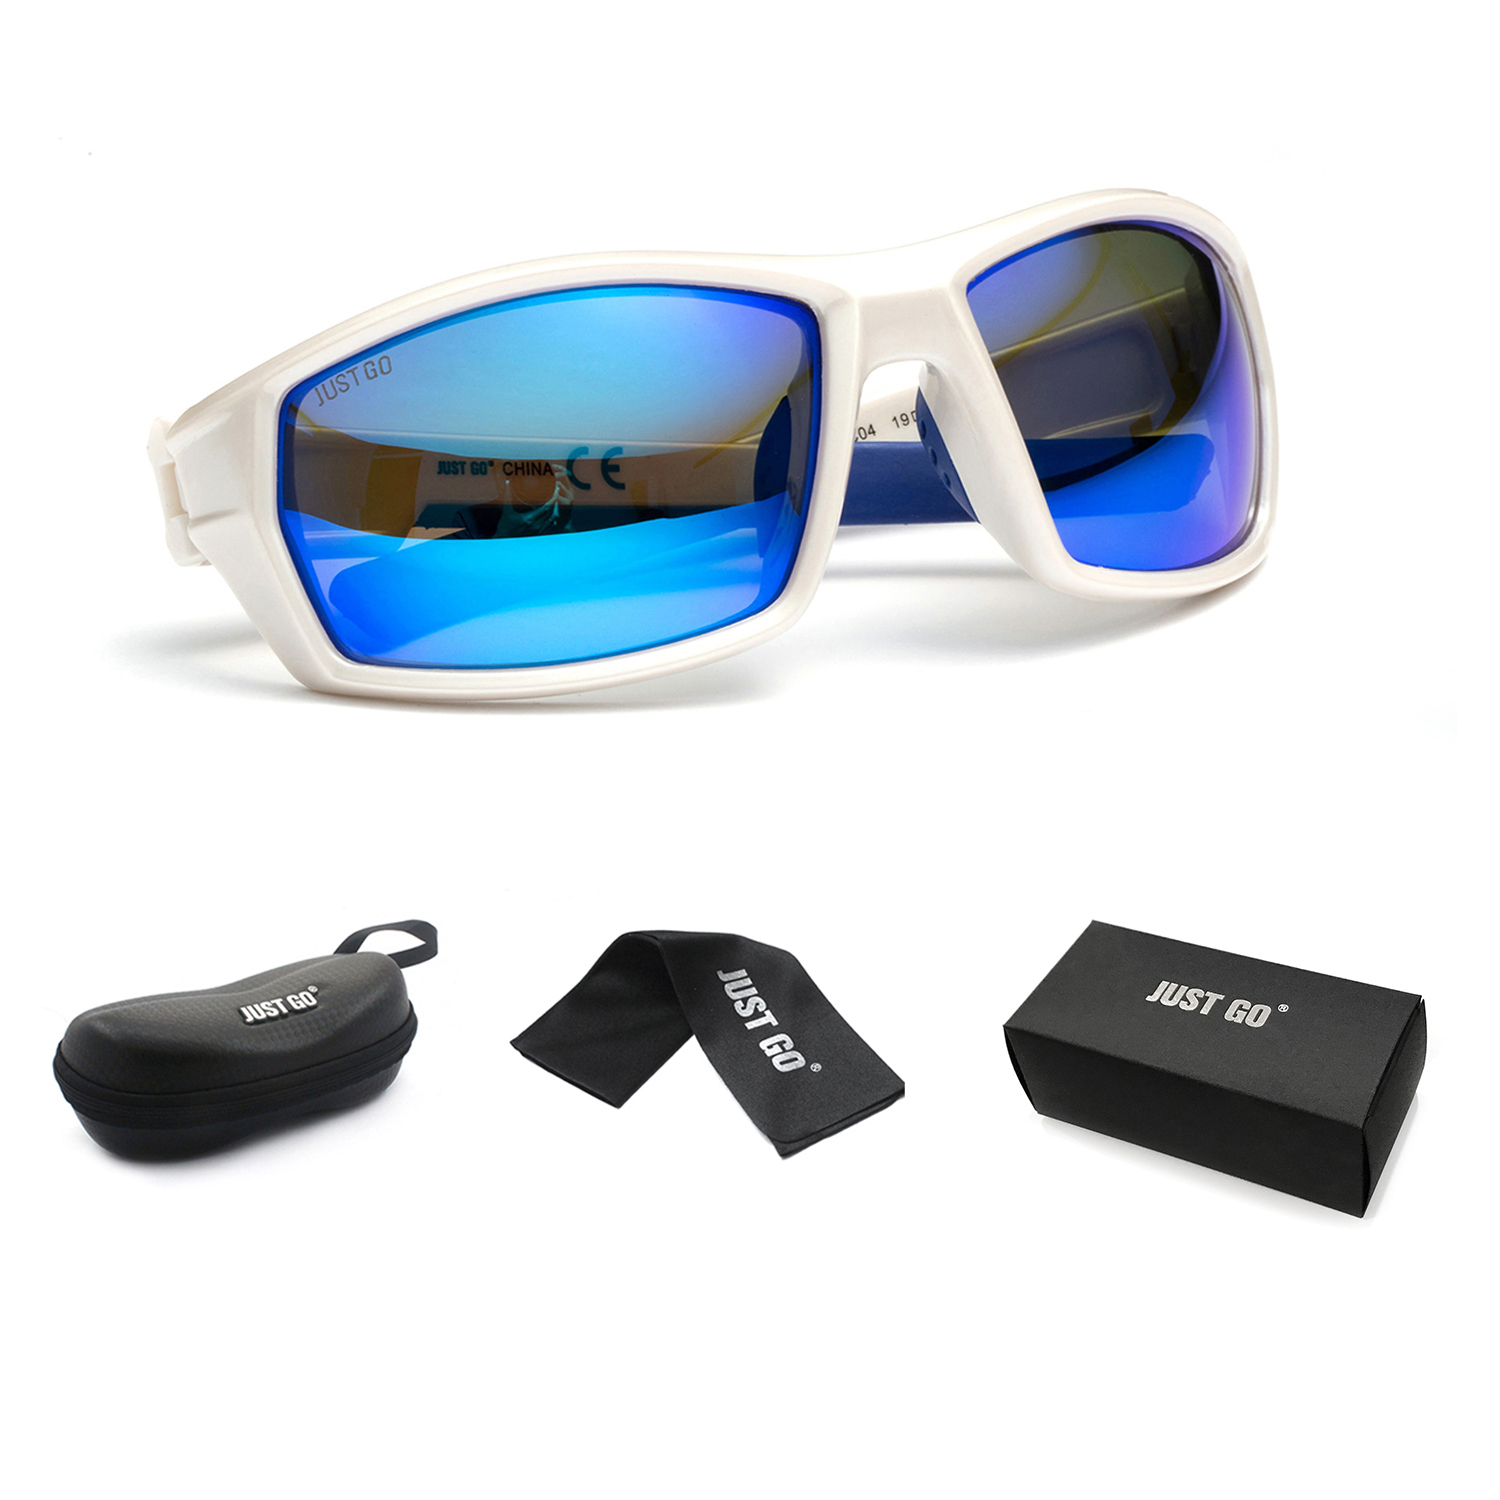 JUST GO Men's Polarized Lens Sports Sunglasses for Cycling Riding Baseball Running Golf, White, Revo Blue - image 1 of 7